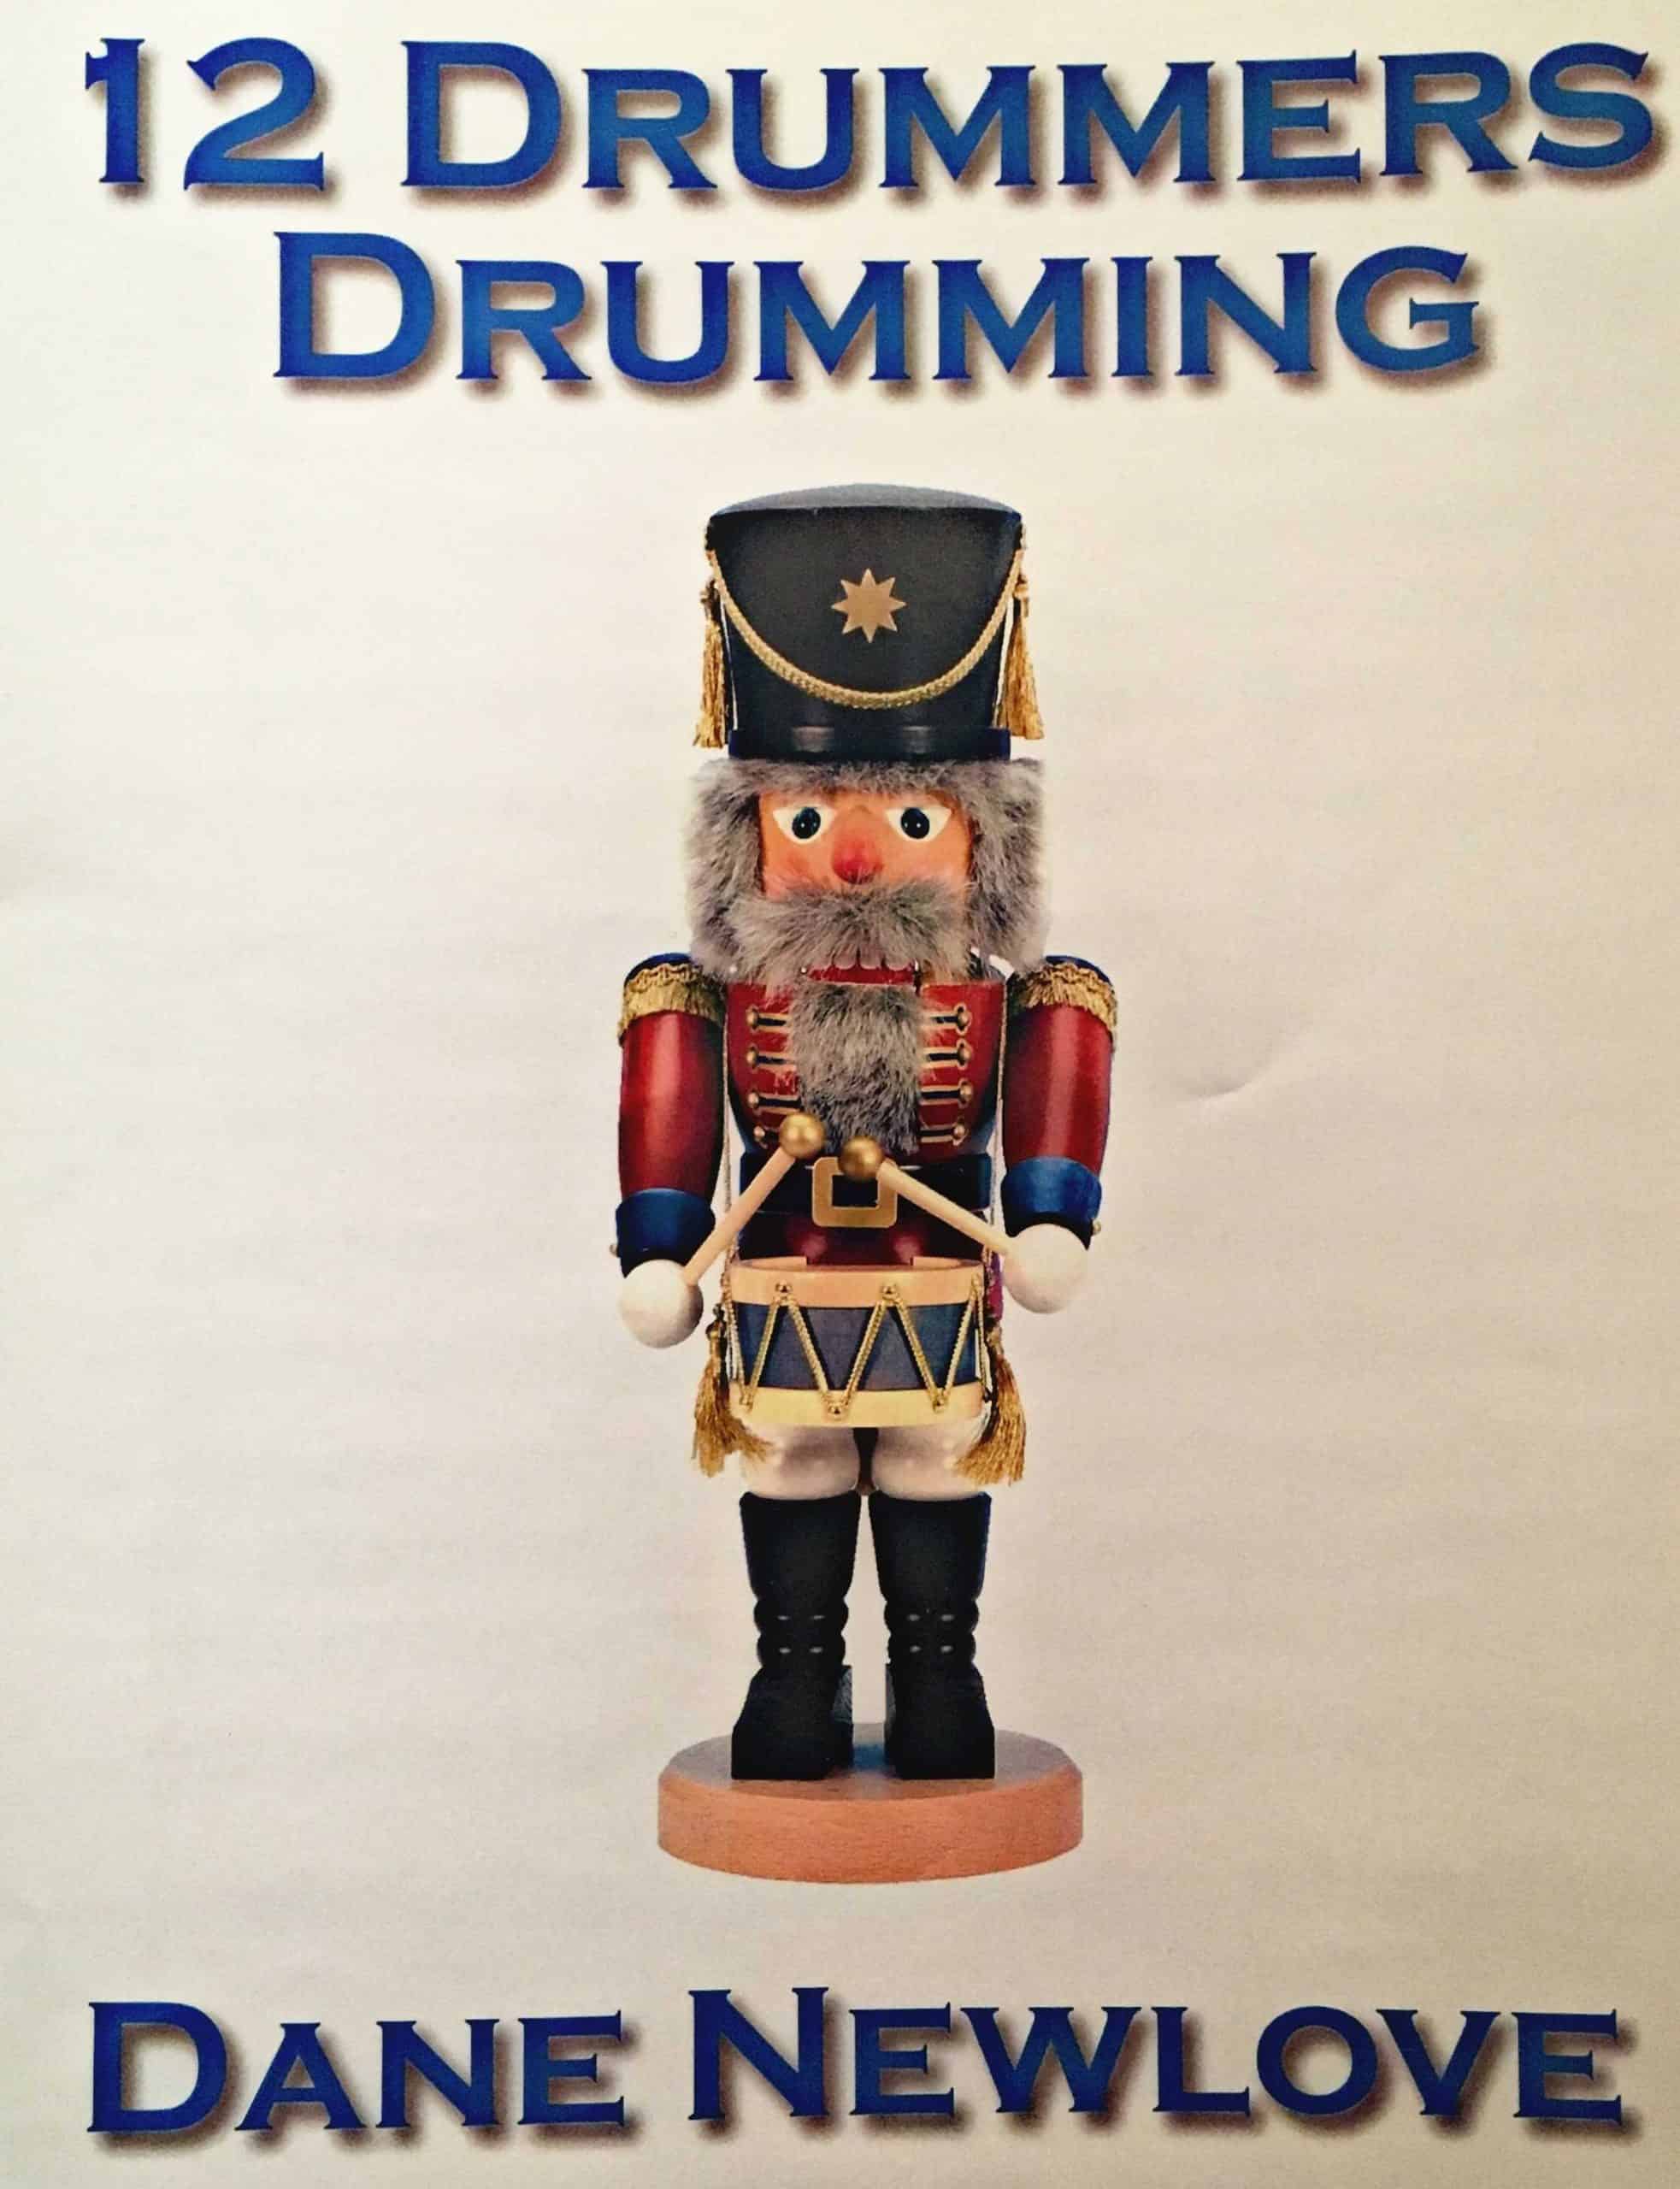 12 Drummers Drumming by Dane Newlove